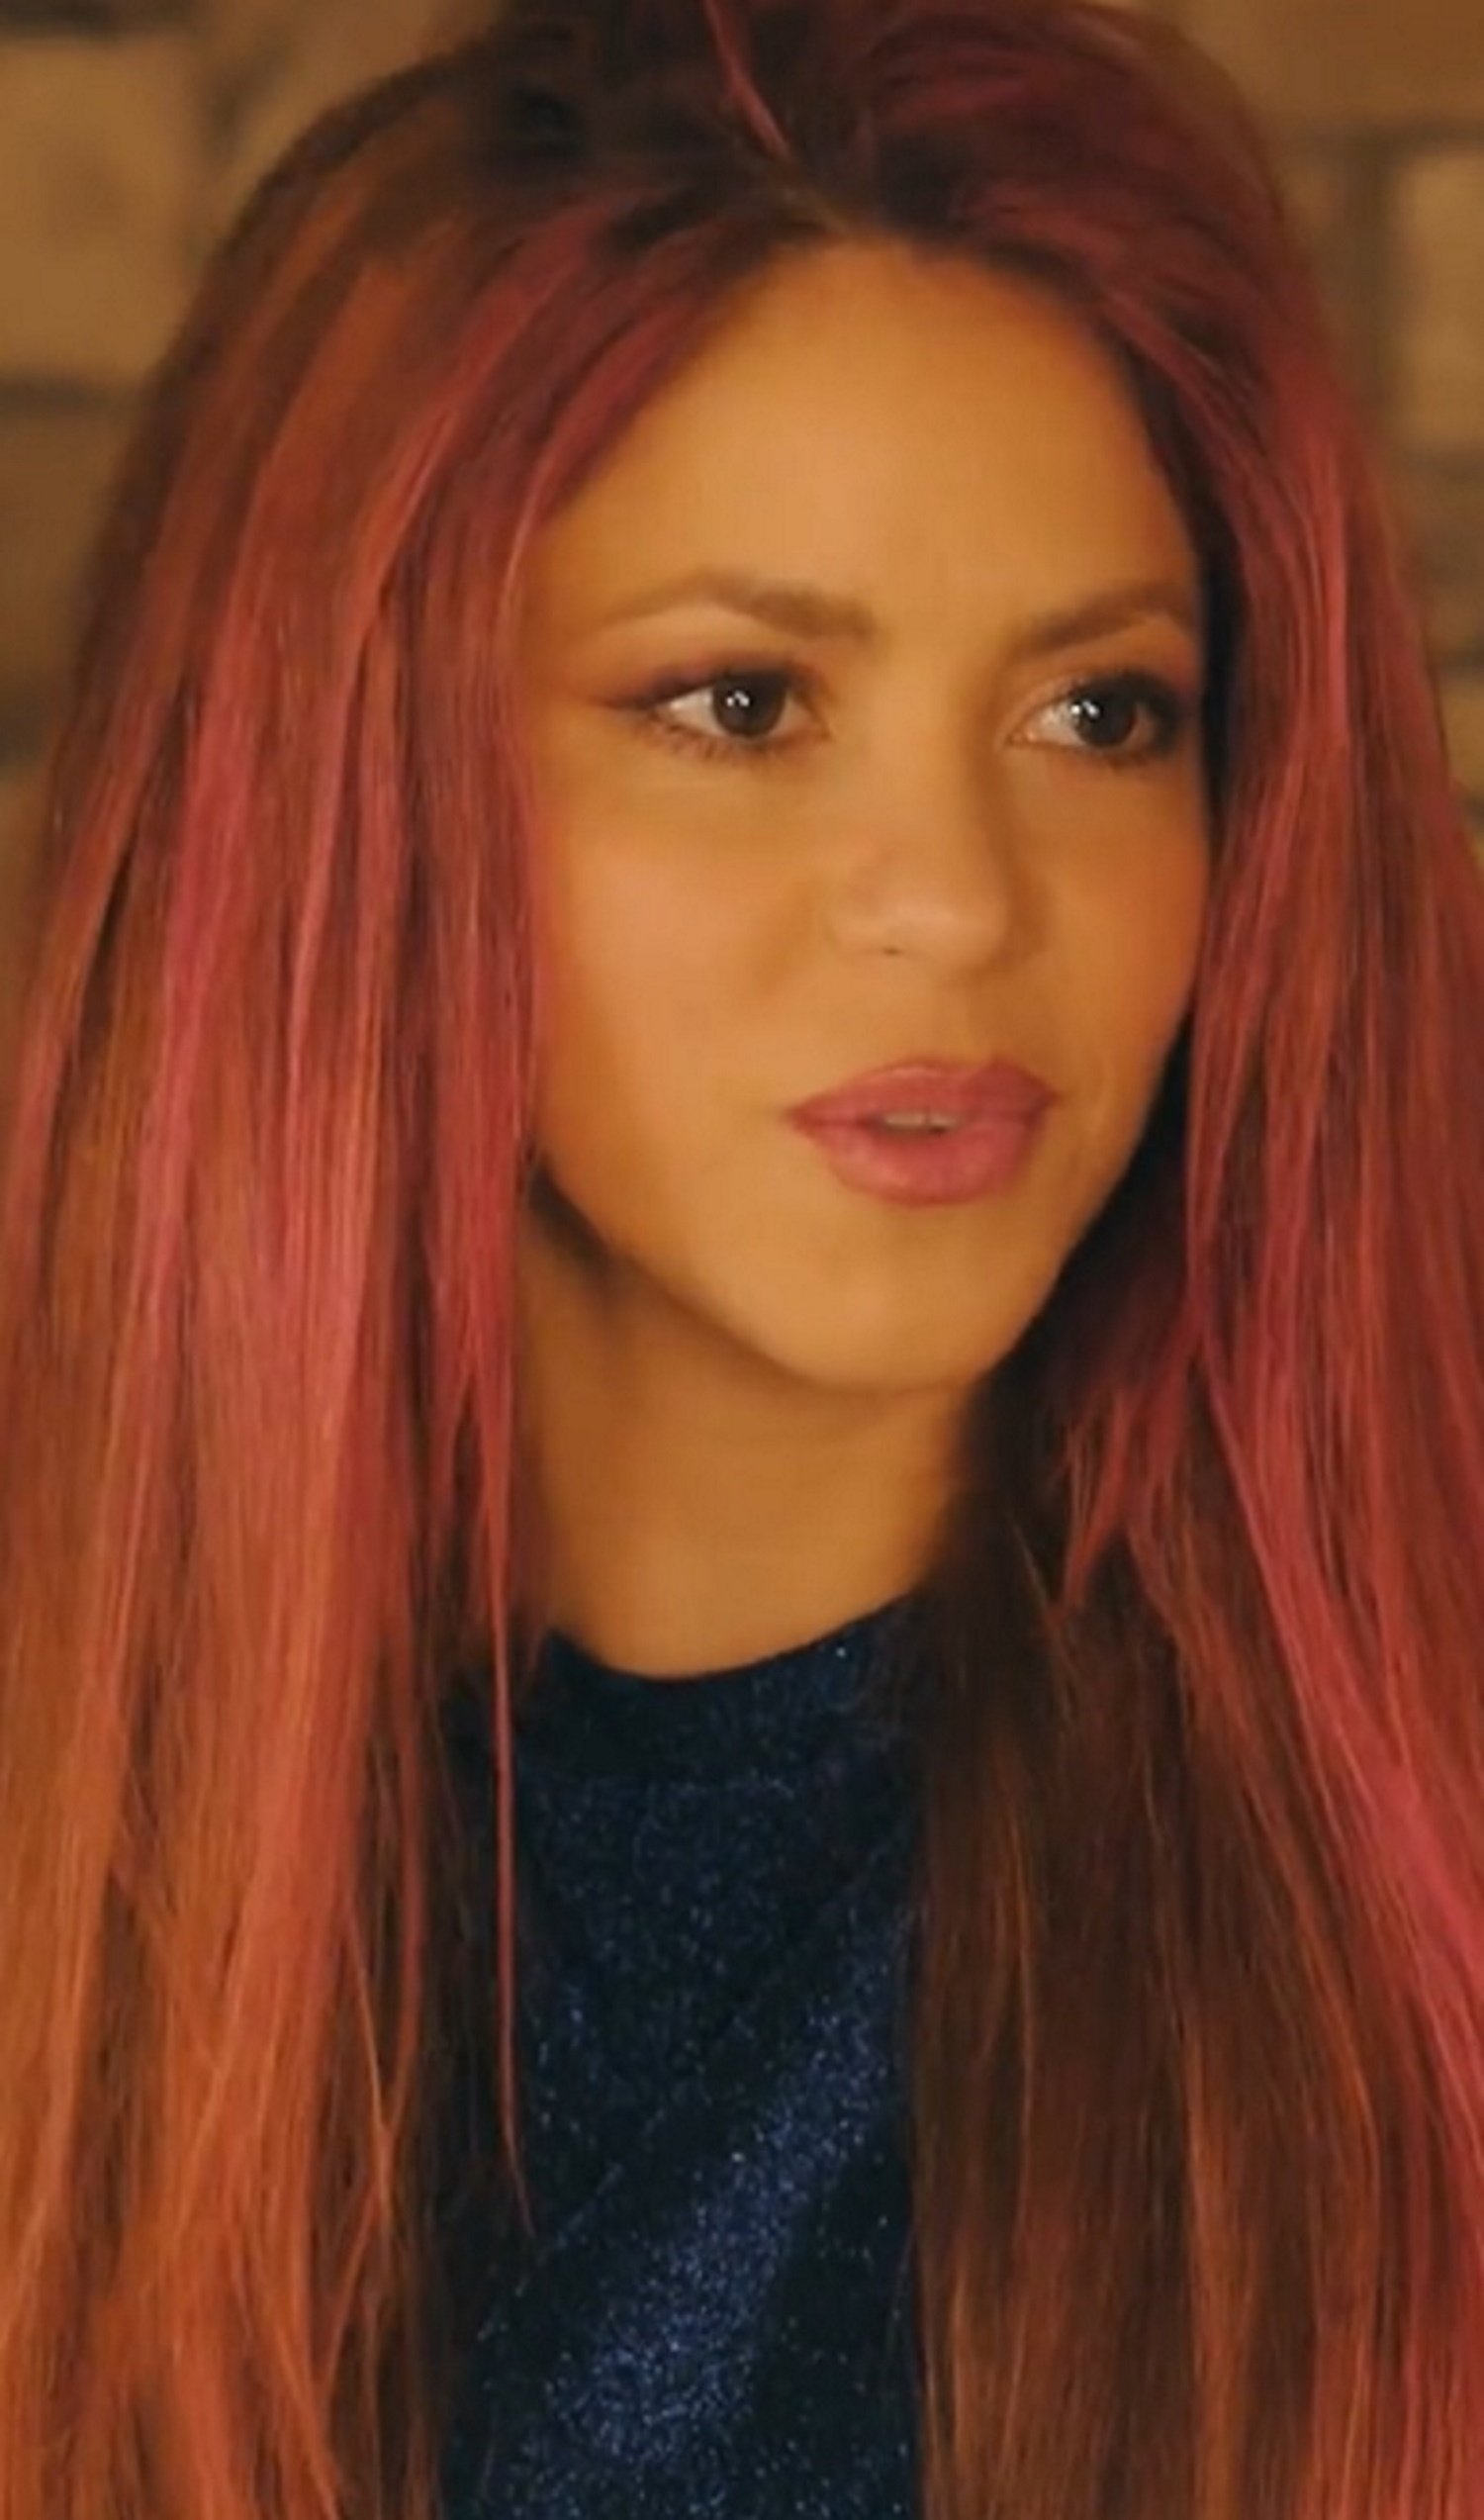 Shakira, emocionada con su primo, dice a qué se dedica: "Orgullosa de ti"